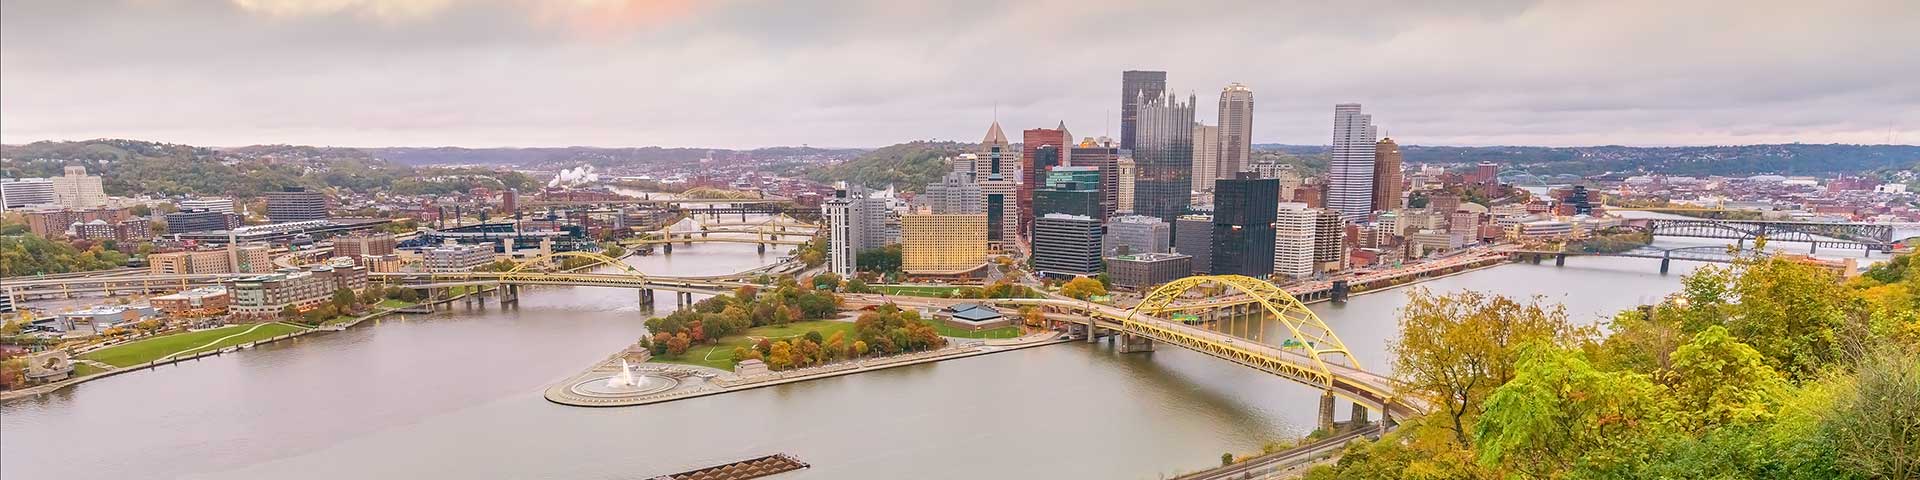 Pittsburgh, PA skyline. 